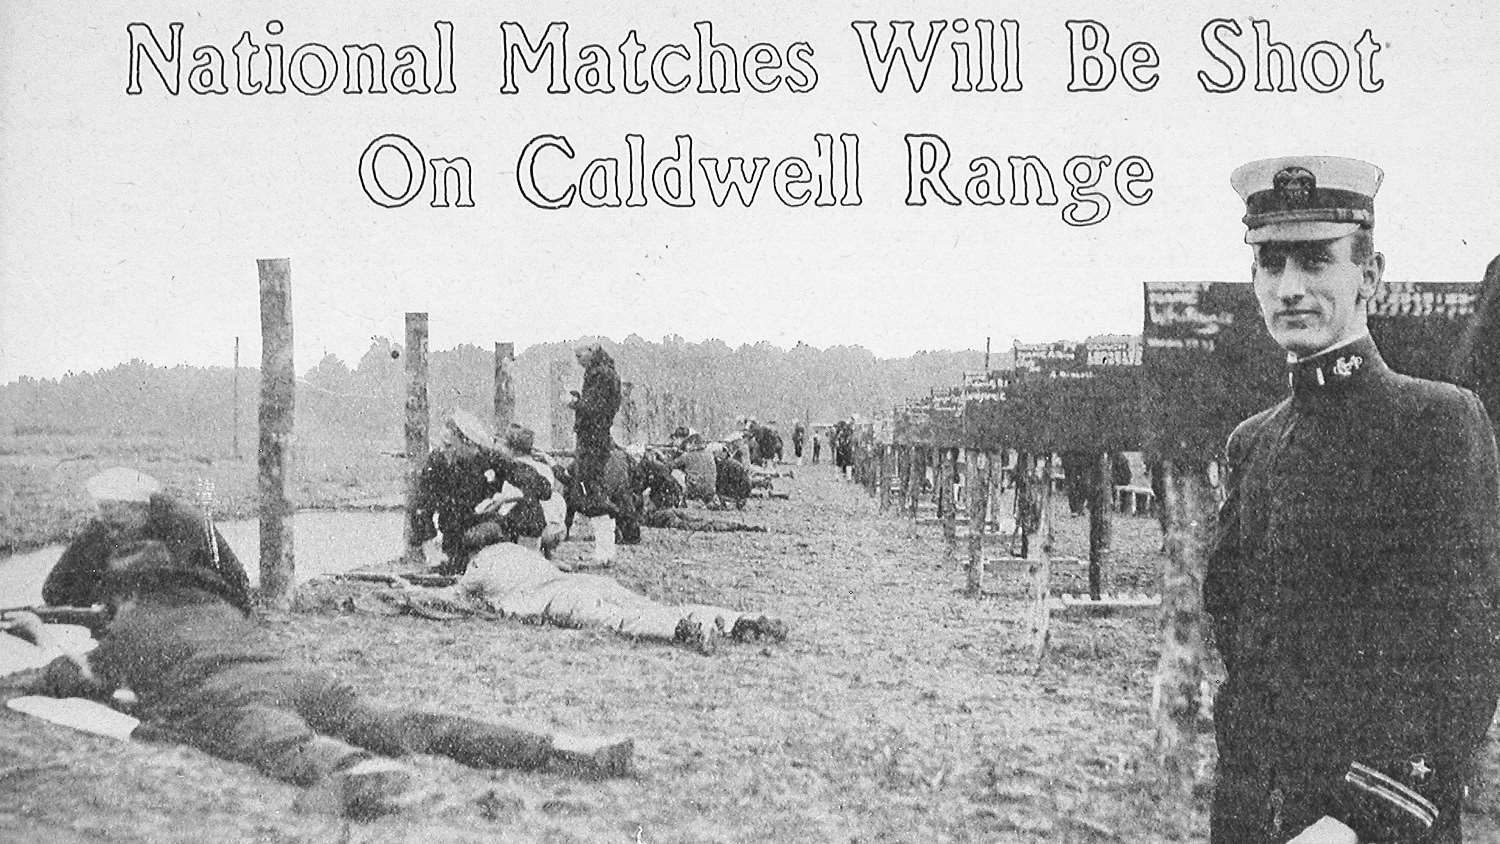 Caldwell Range | National Matches